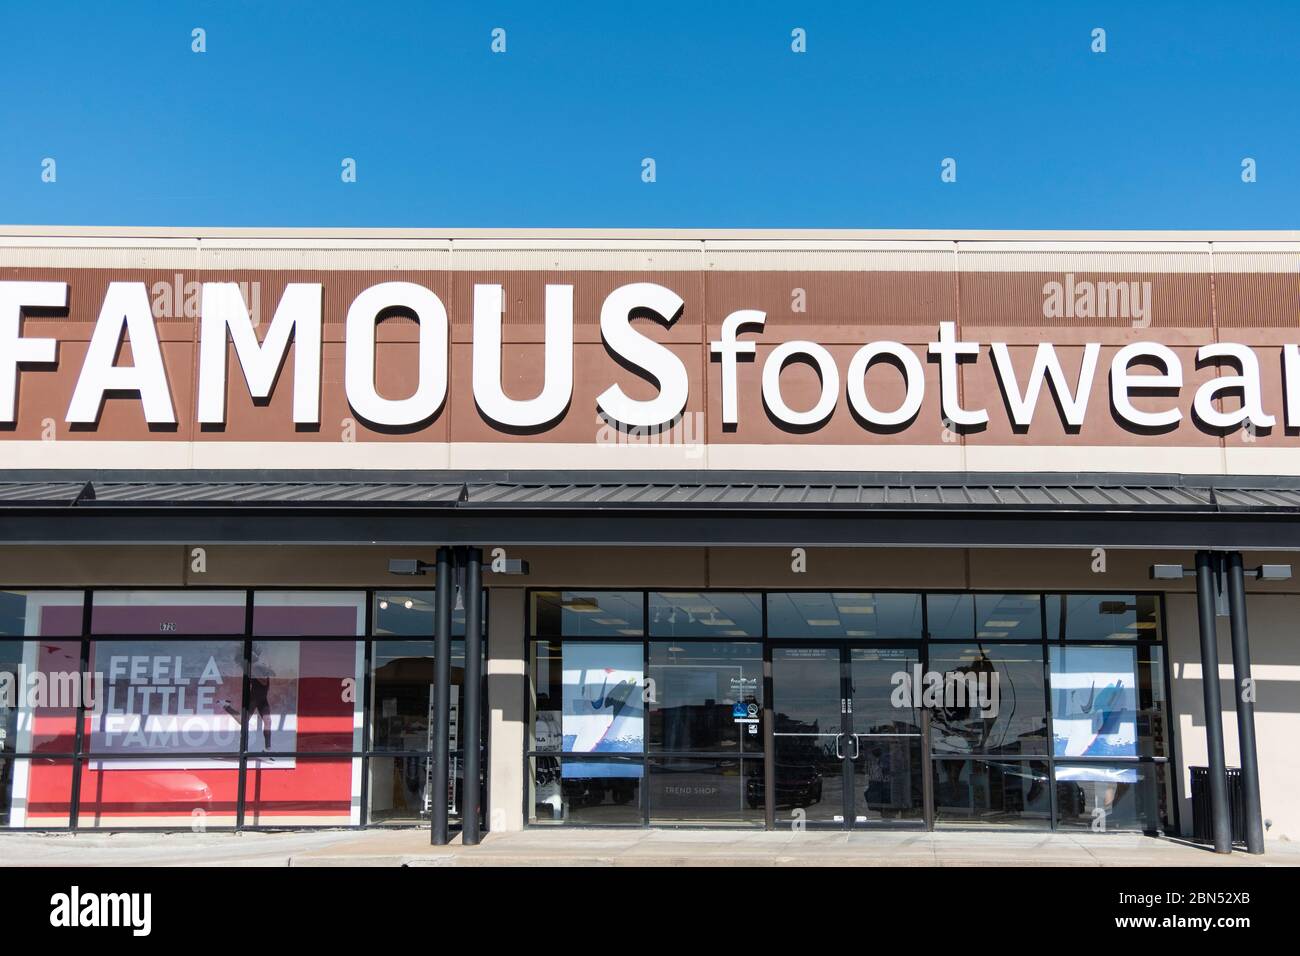 Exterior storefront of Famous footwear shoe store in Wichita, Kansas, USA. Stock Photo